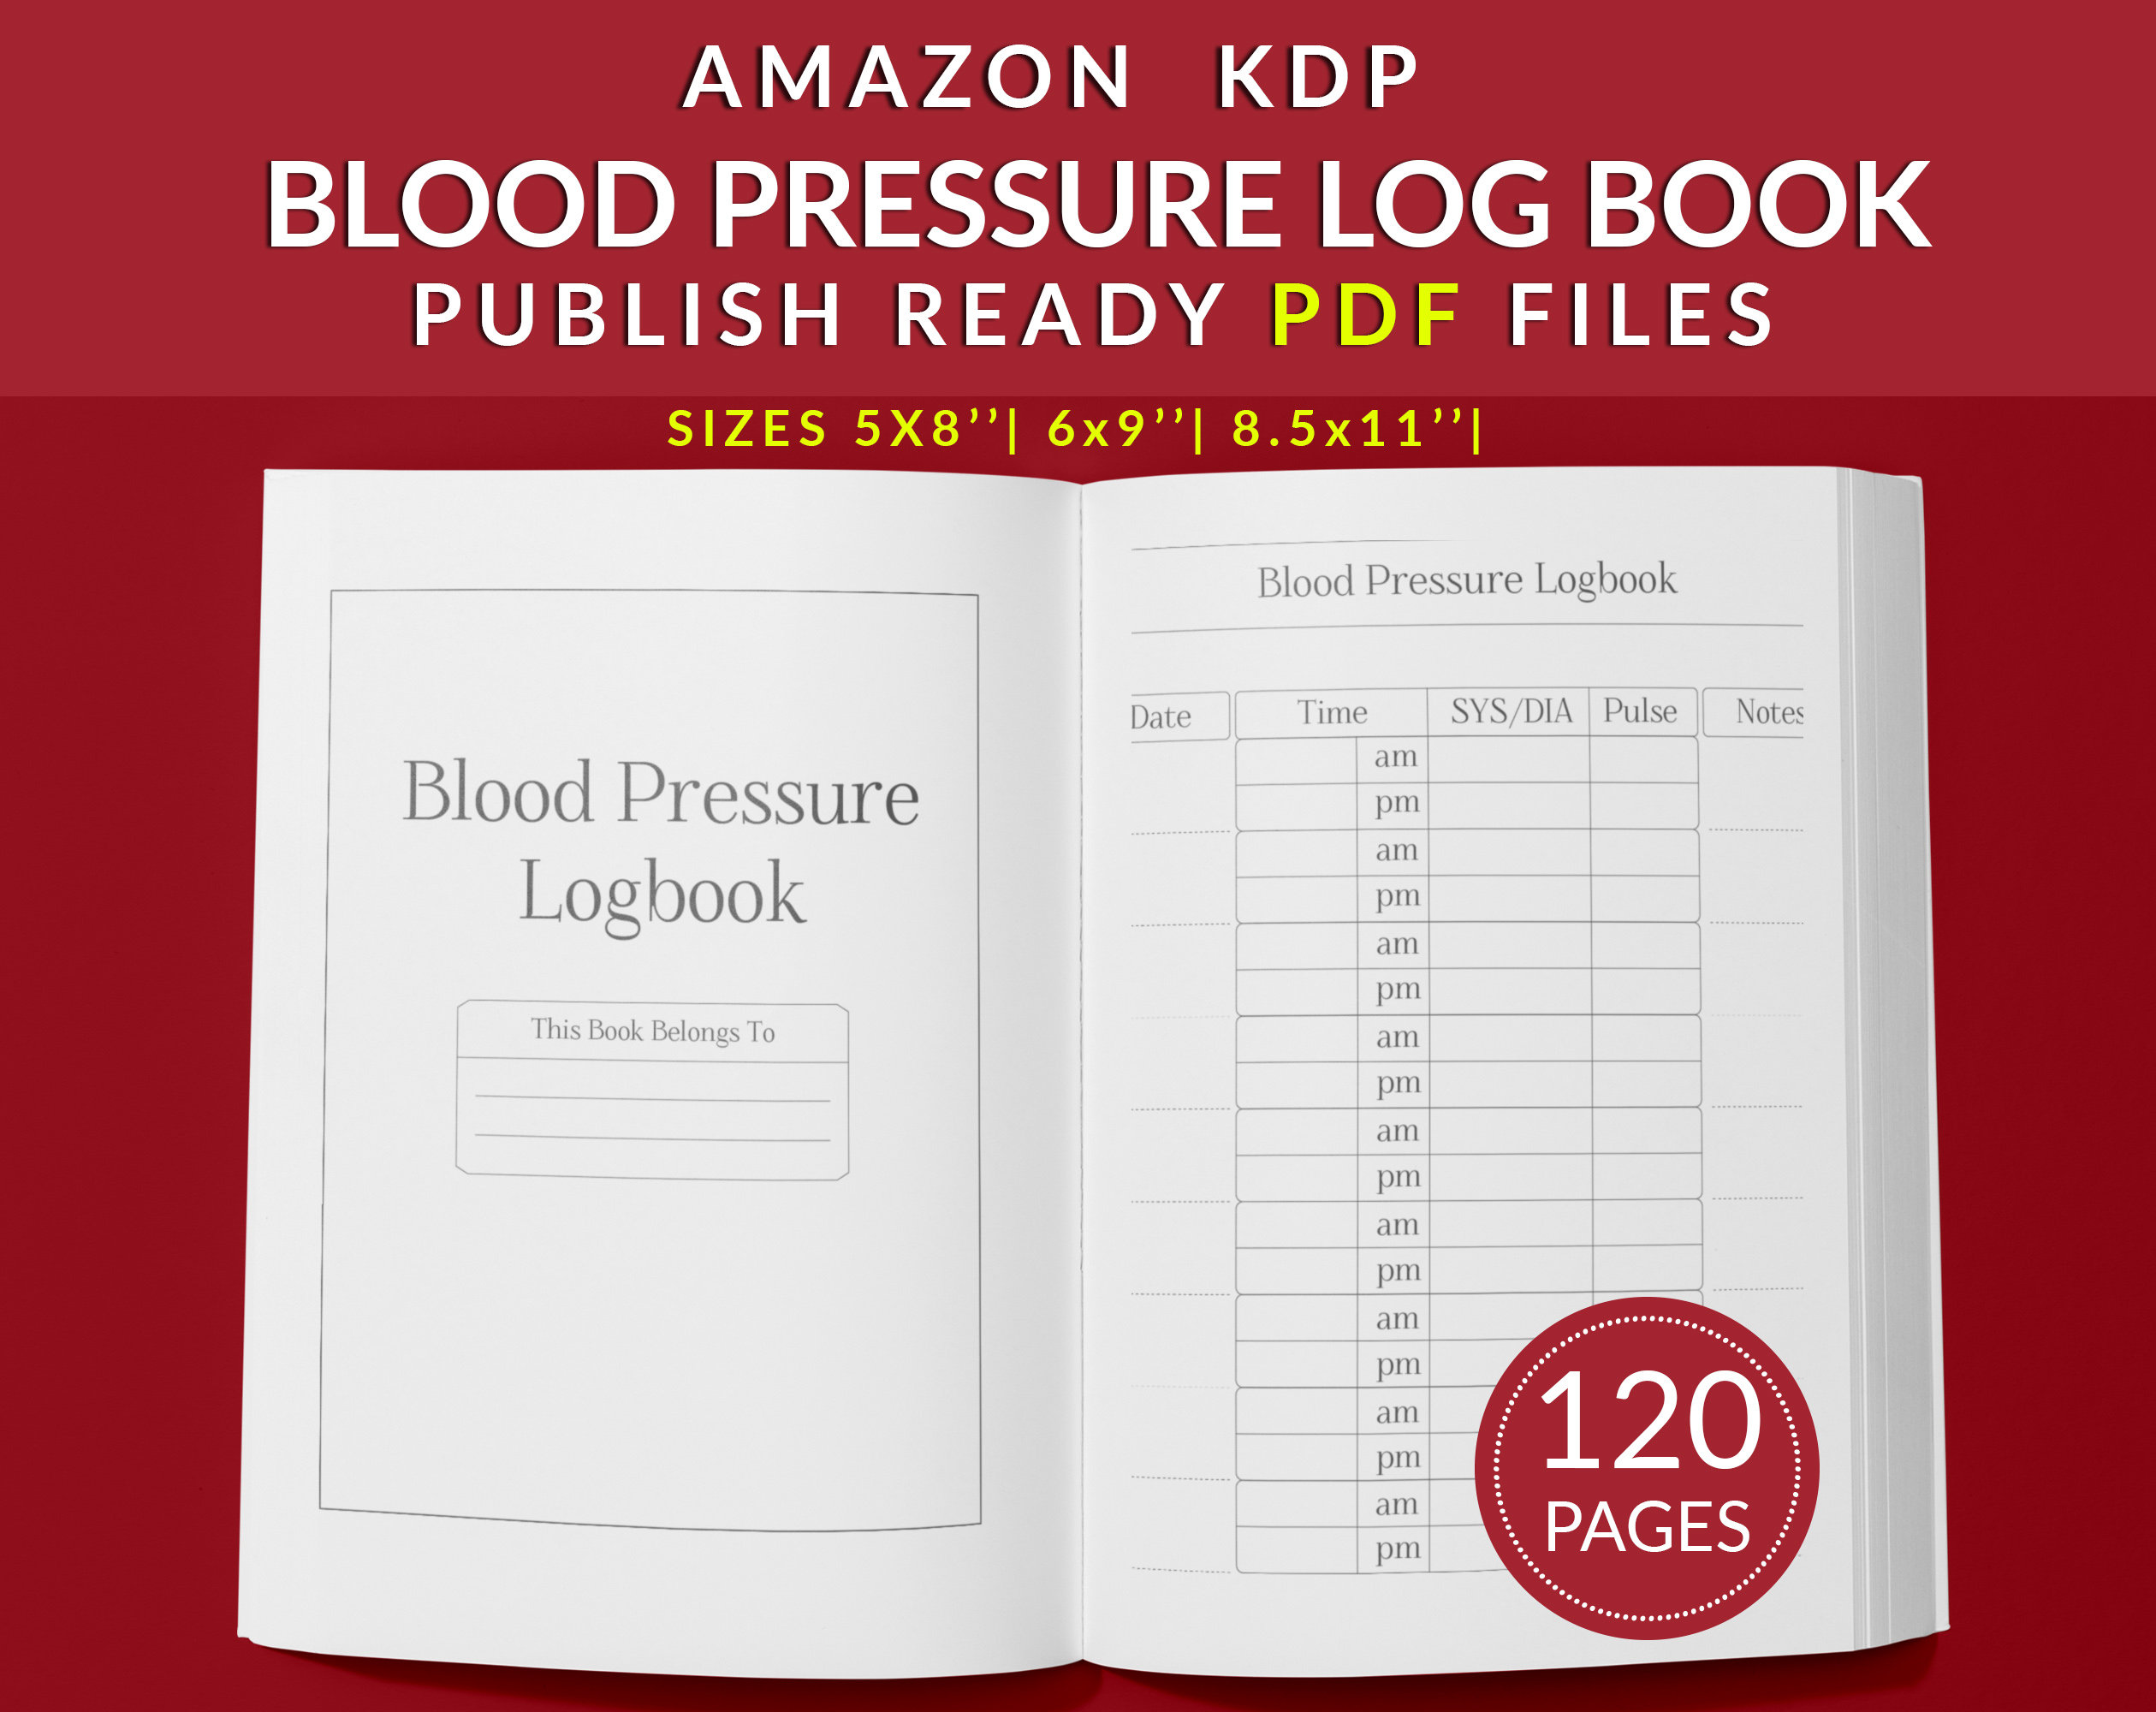 Blood Pressure Log Book 120 Seiten Ready To Upload Pdf Etsy